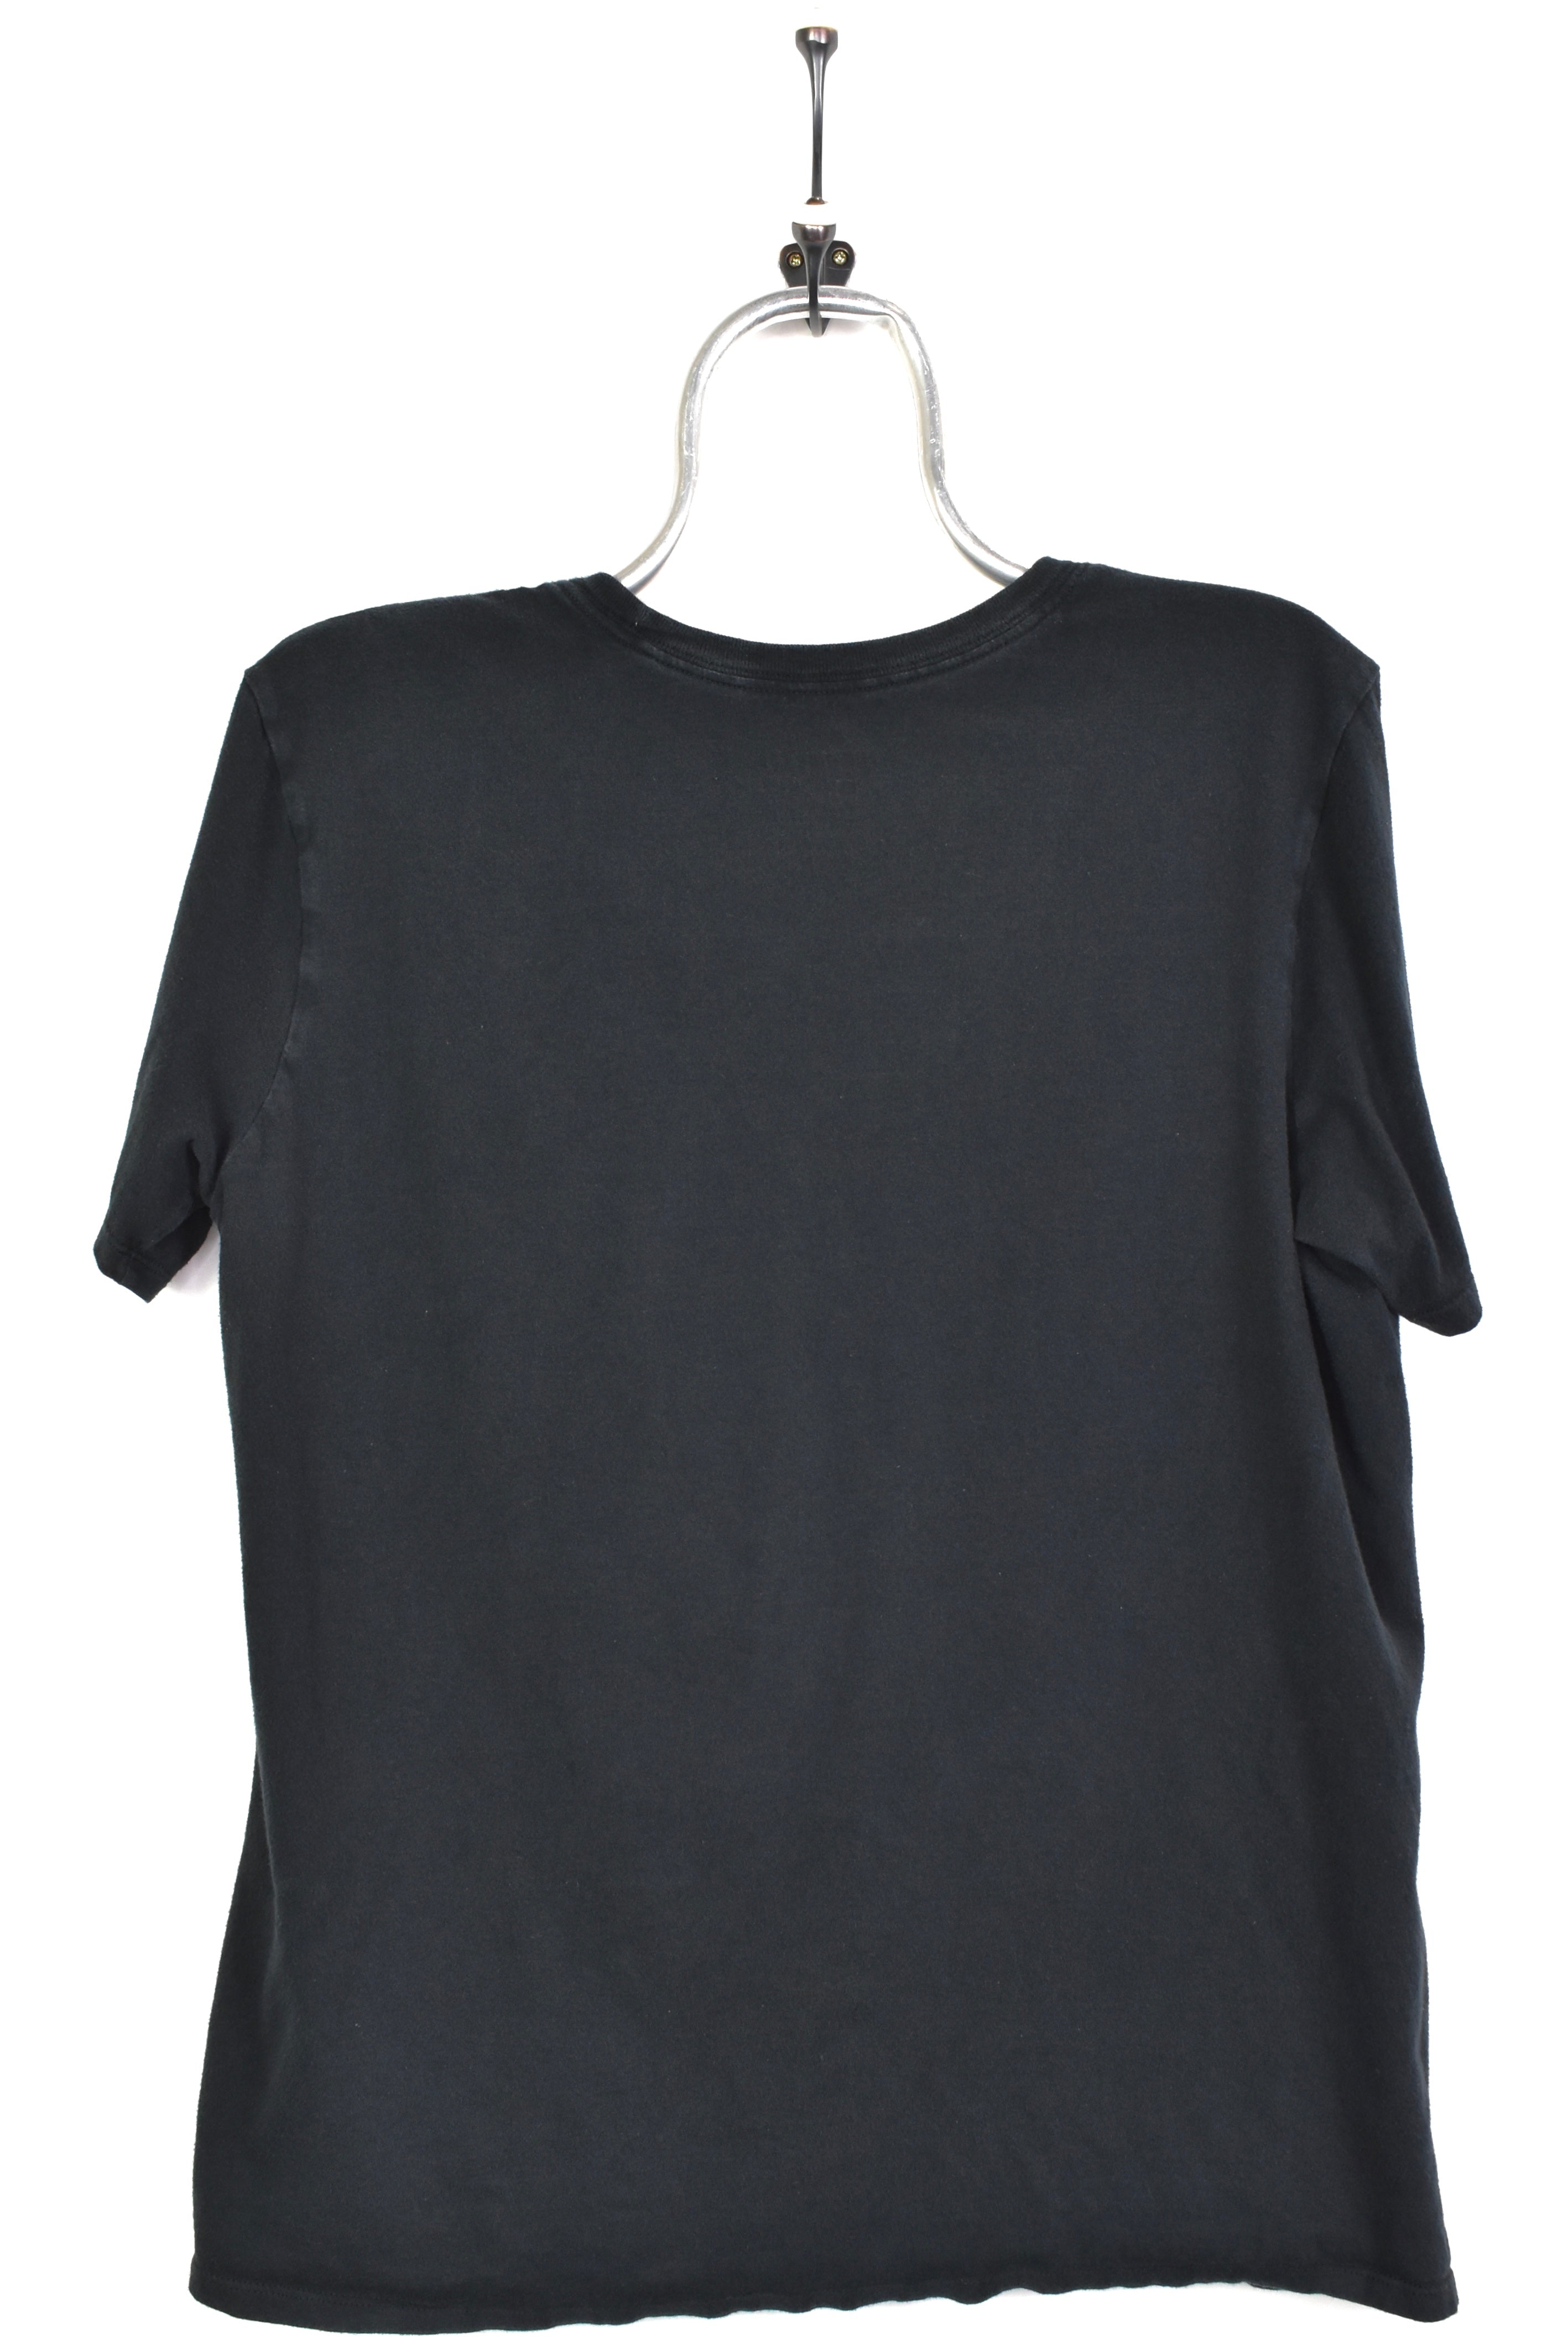 Women's modern Nike shirt, short sleeve black graphic tee - medium NIKE